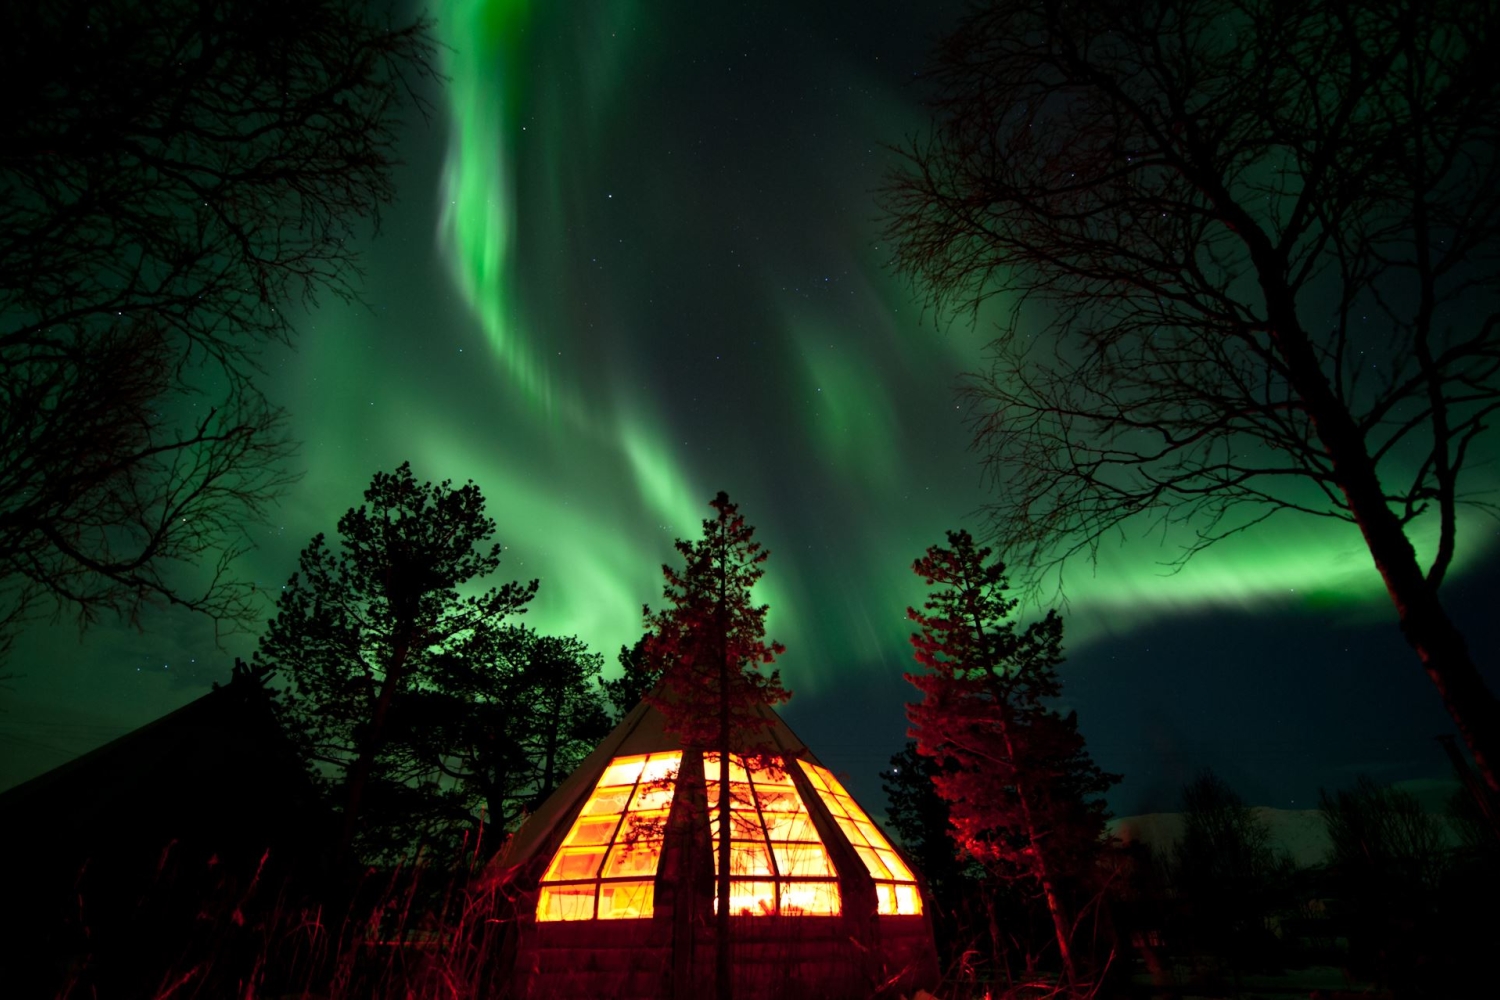 Lit gamme hut with Norhtern Lights on the sky avbove